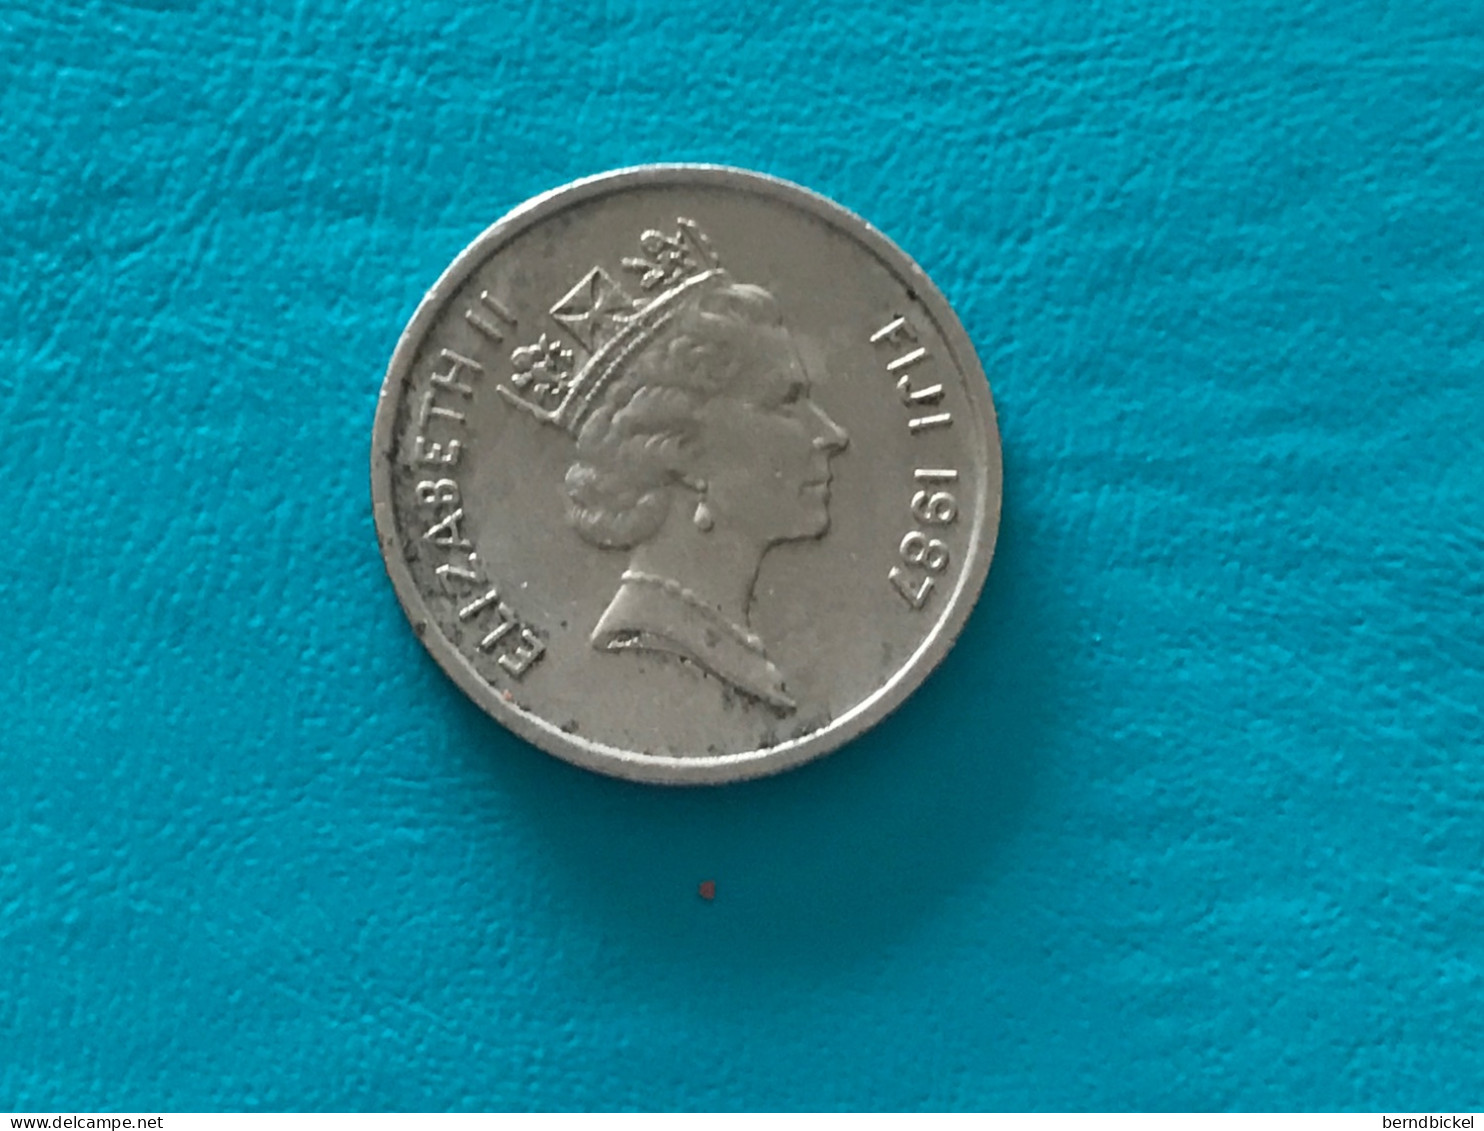 Münze Münzen Umlaufmünze Fiji 5 Cent 1987 - Fidschi